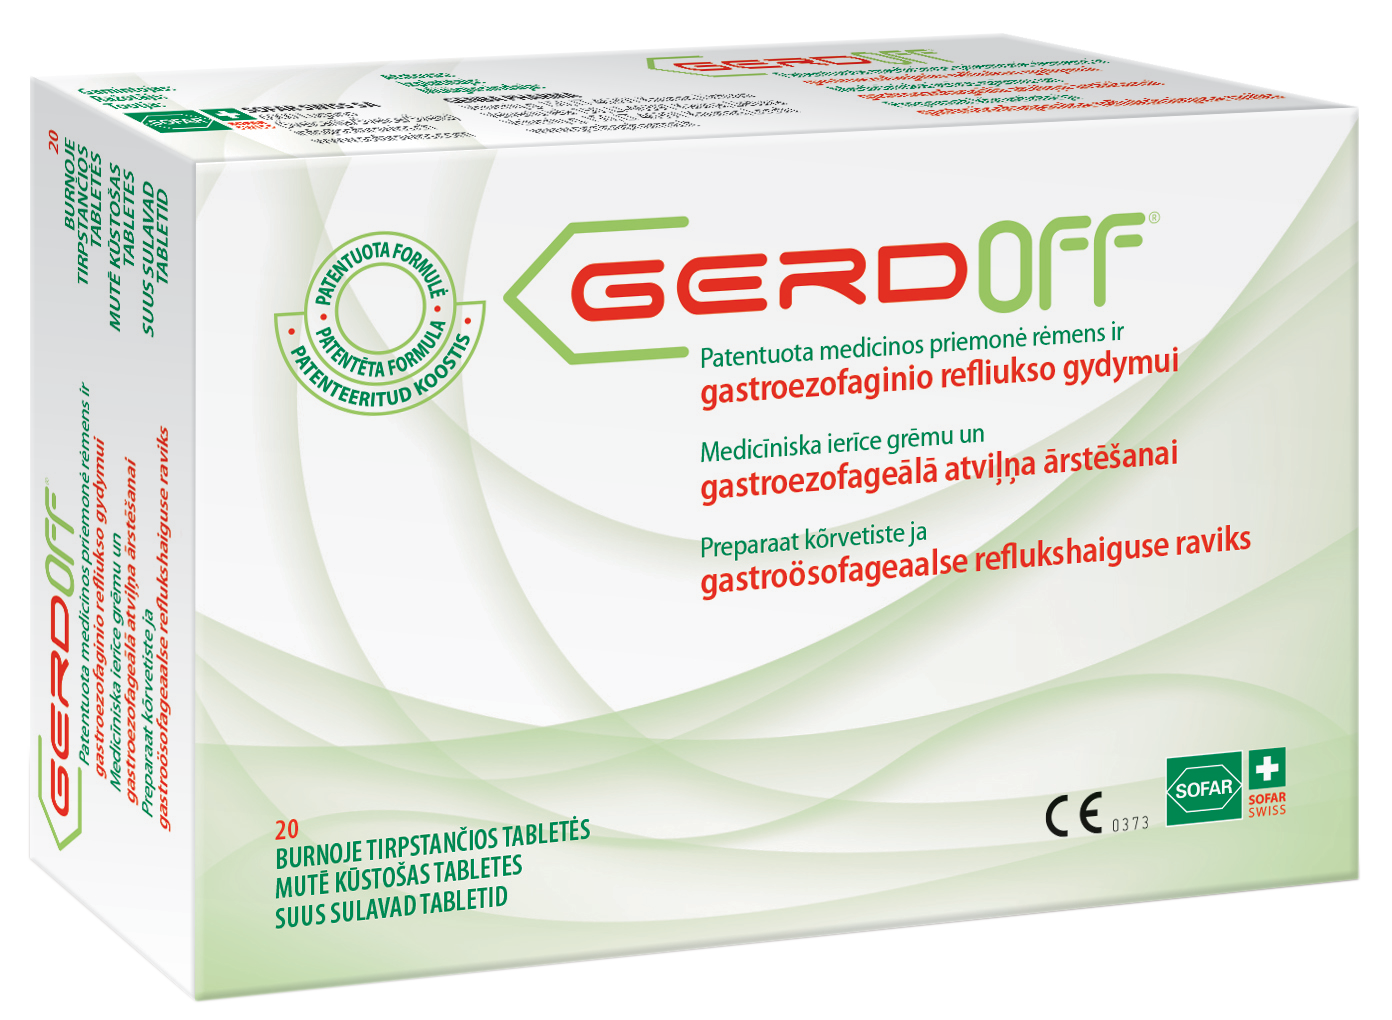 GERDOFF pills, 20 pcs.